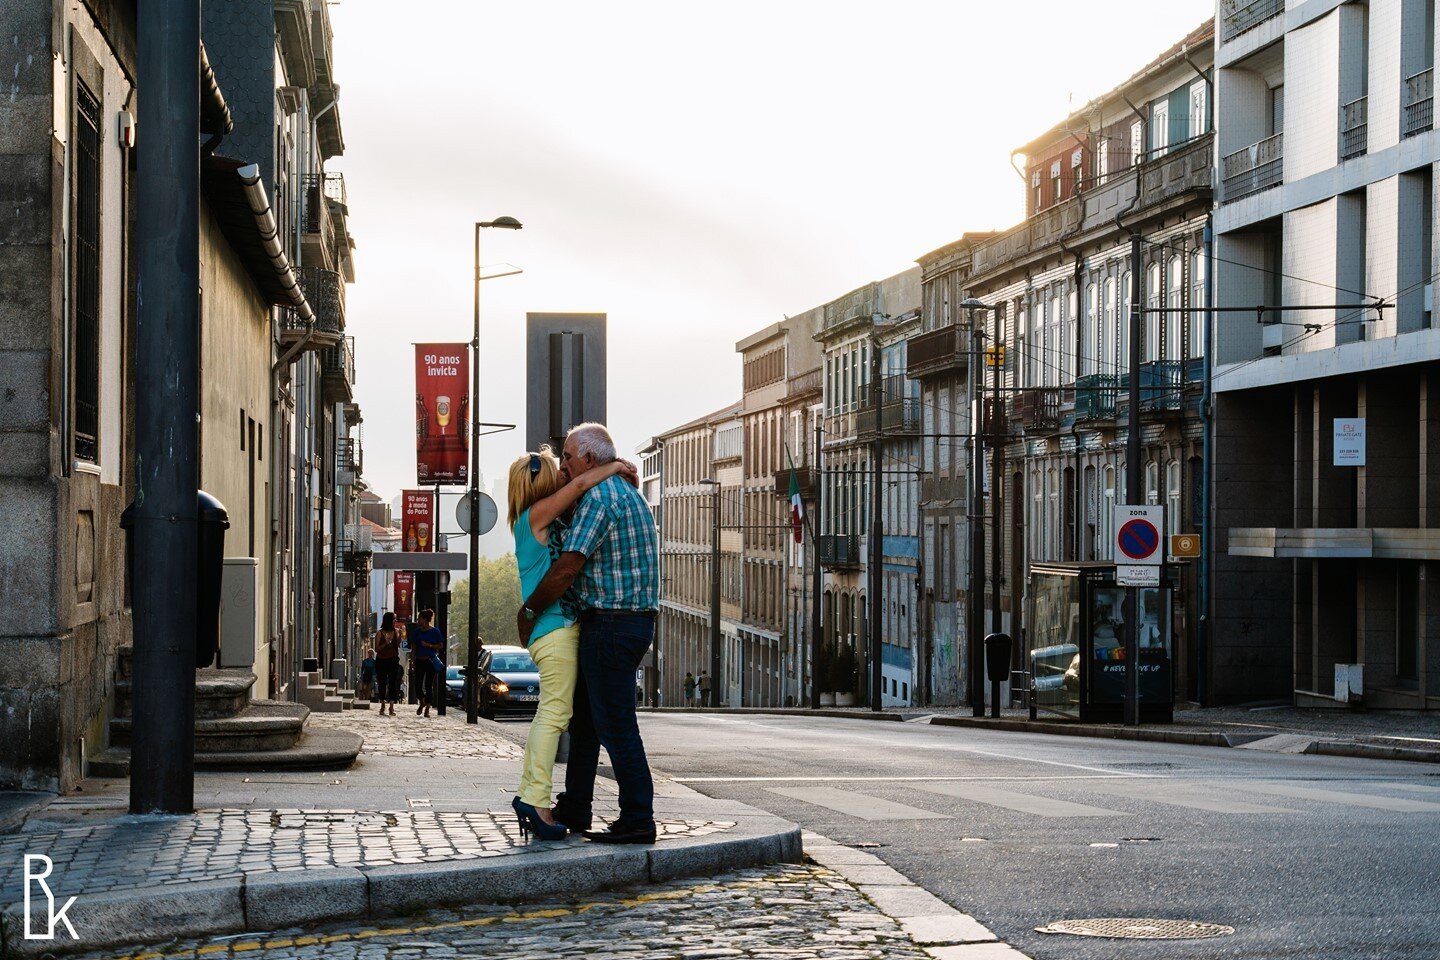 Love in Porto ⁠
.⁠
.⁠
.⁠
.⁠
#porto #portugal #street #streetphotography #travel #travelphotography #travelgram #travelawesome #instatravel #instago #instapassport #natgeoyourshot #yourshotphotographer #wanderlust #explore #lonelyplanet #nategeotravel